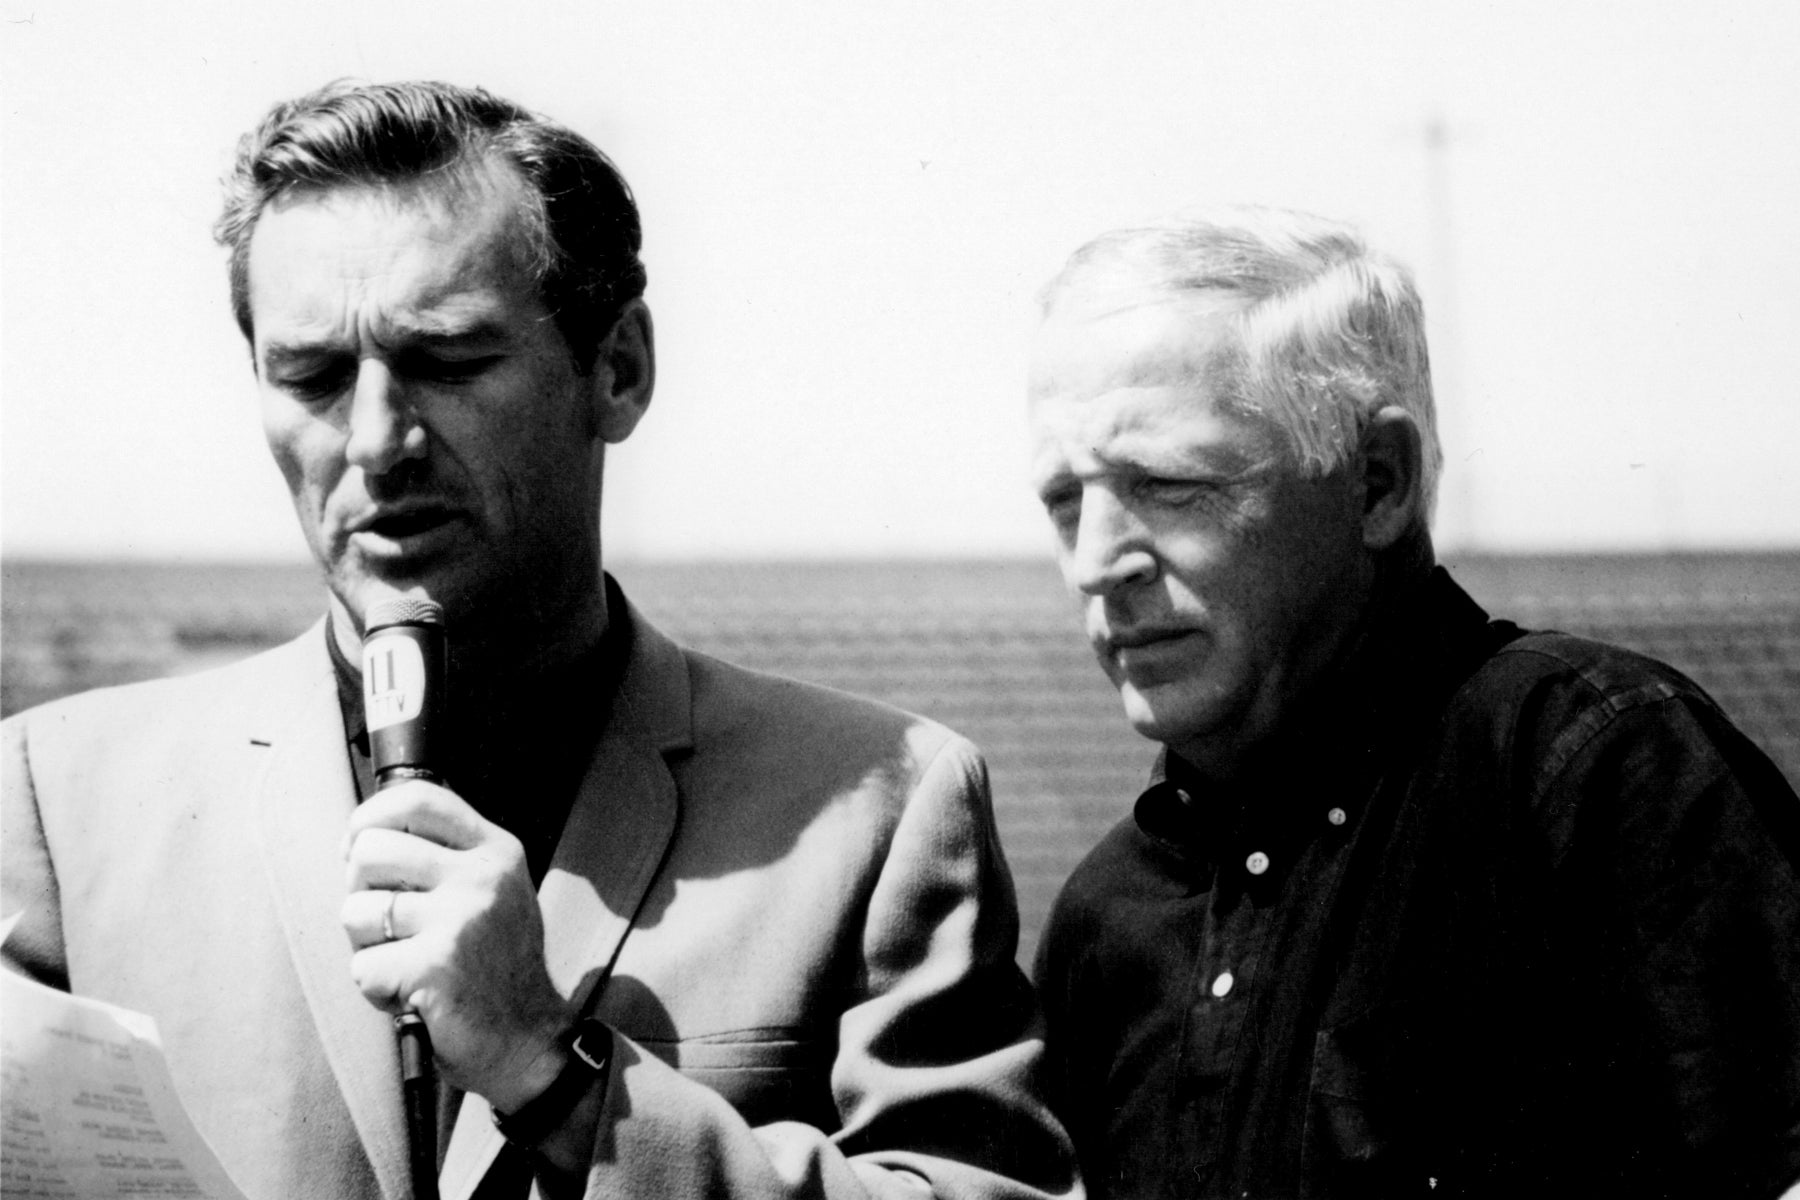 Tom Kelly and John McKay